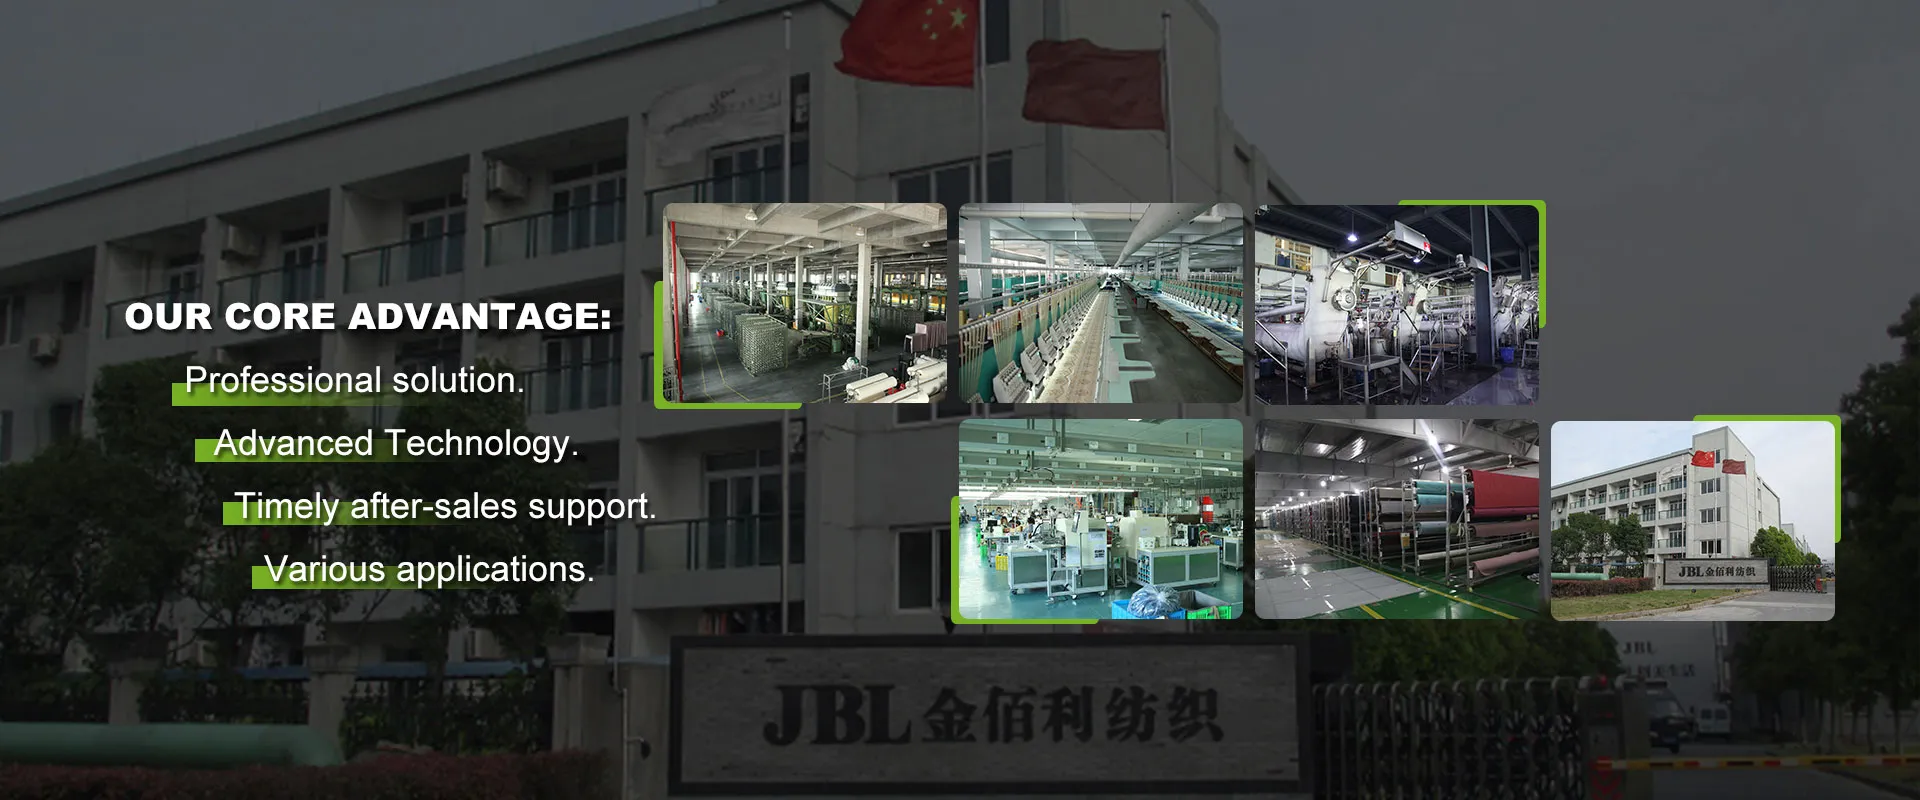 Haining Jinbaili Textile Co., Ltd.